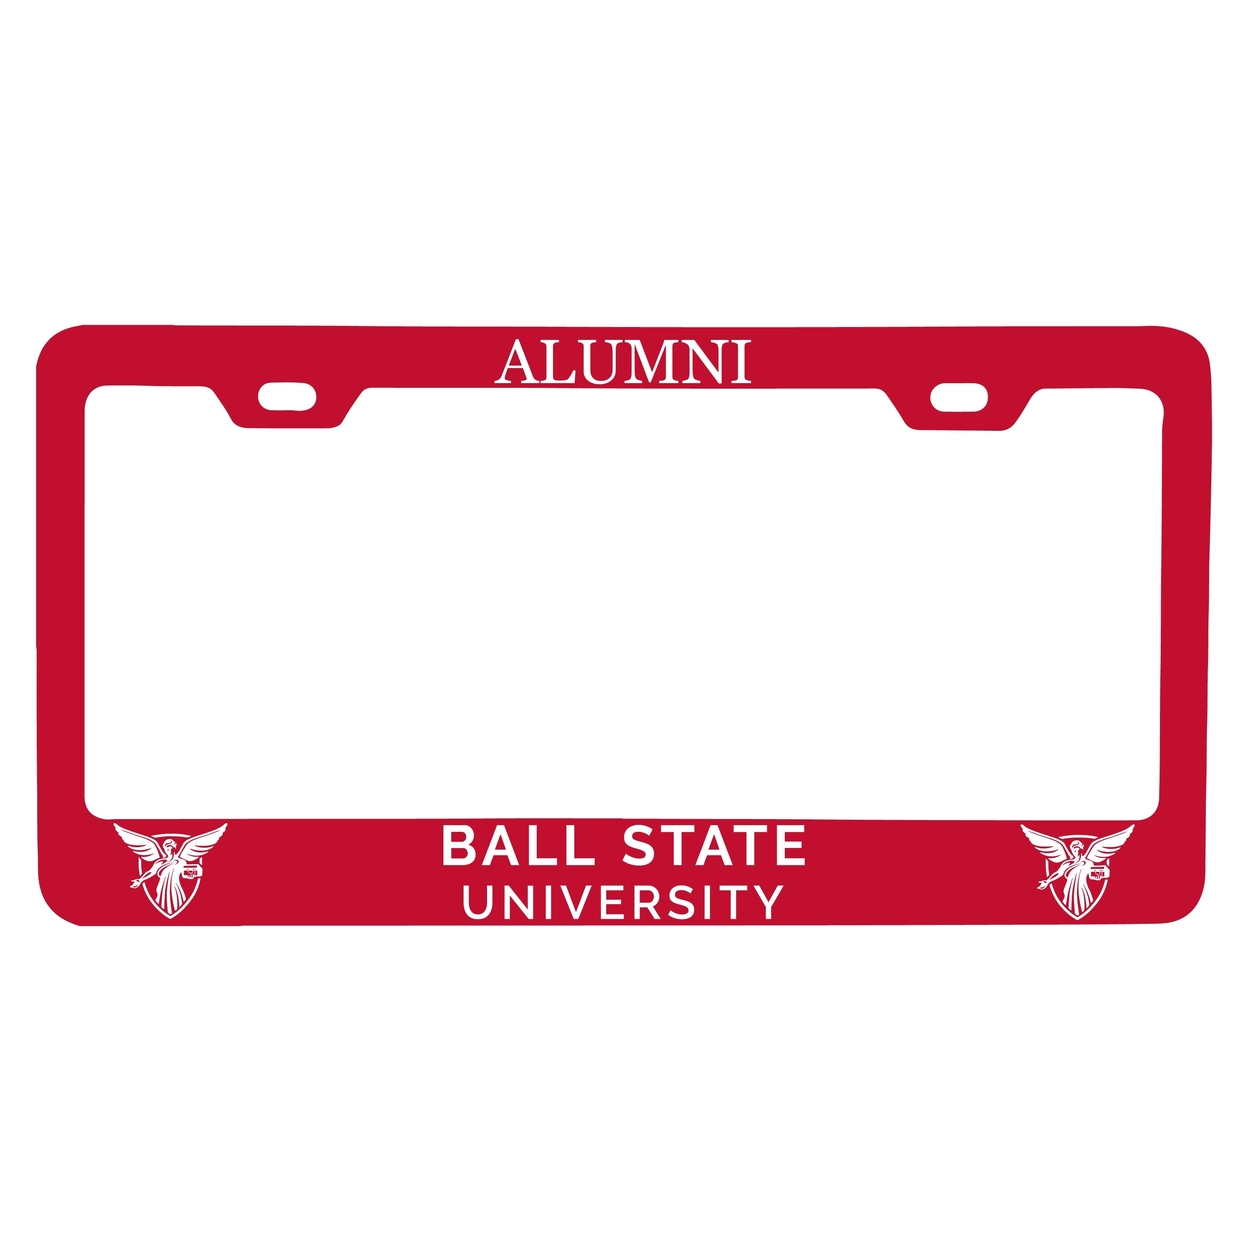 Ball State University Alumni License Plate Frame